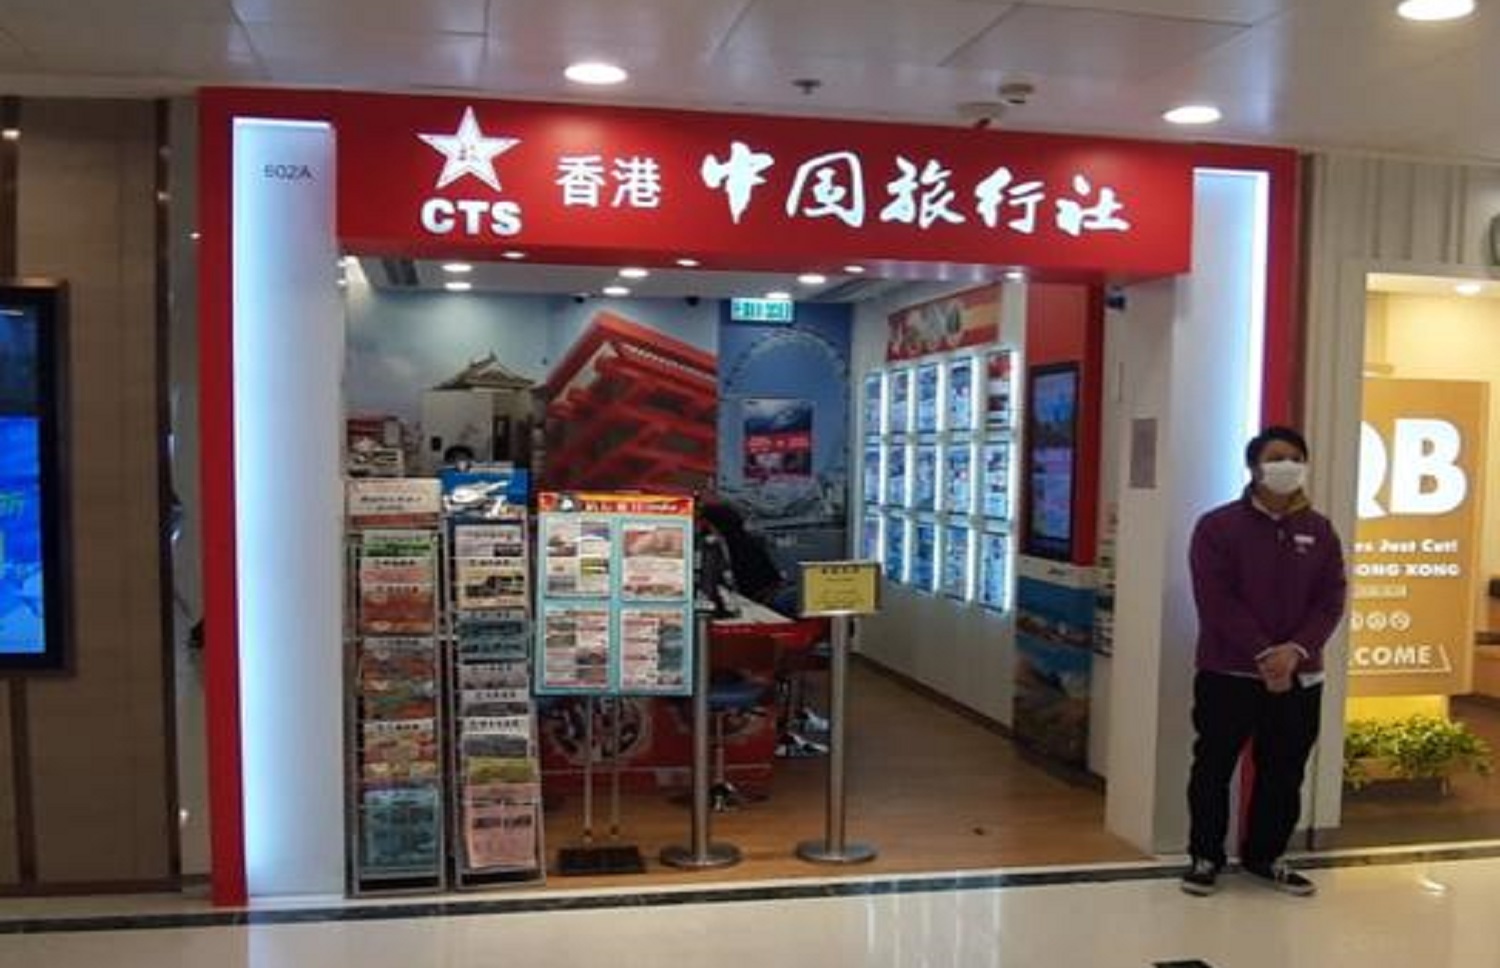 china travel service office in hong kong